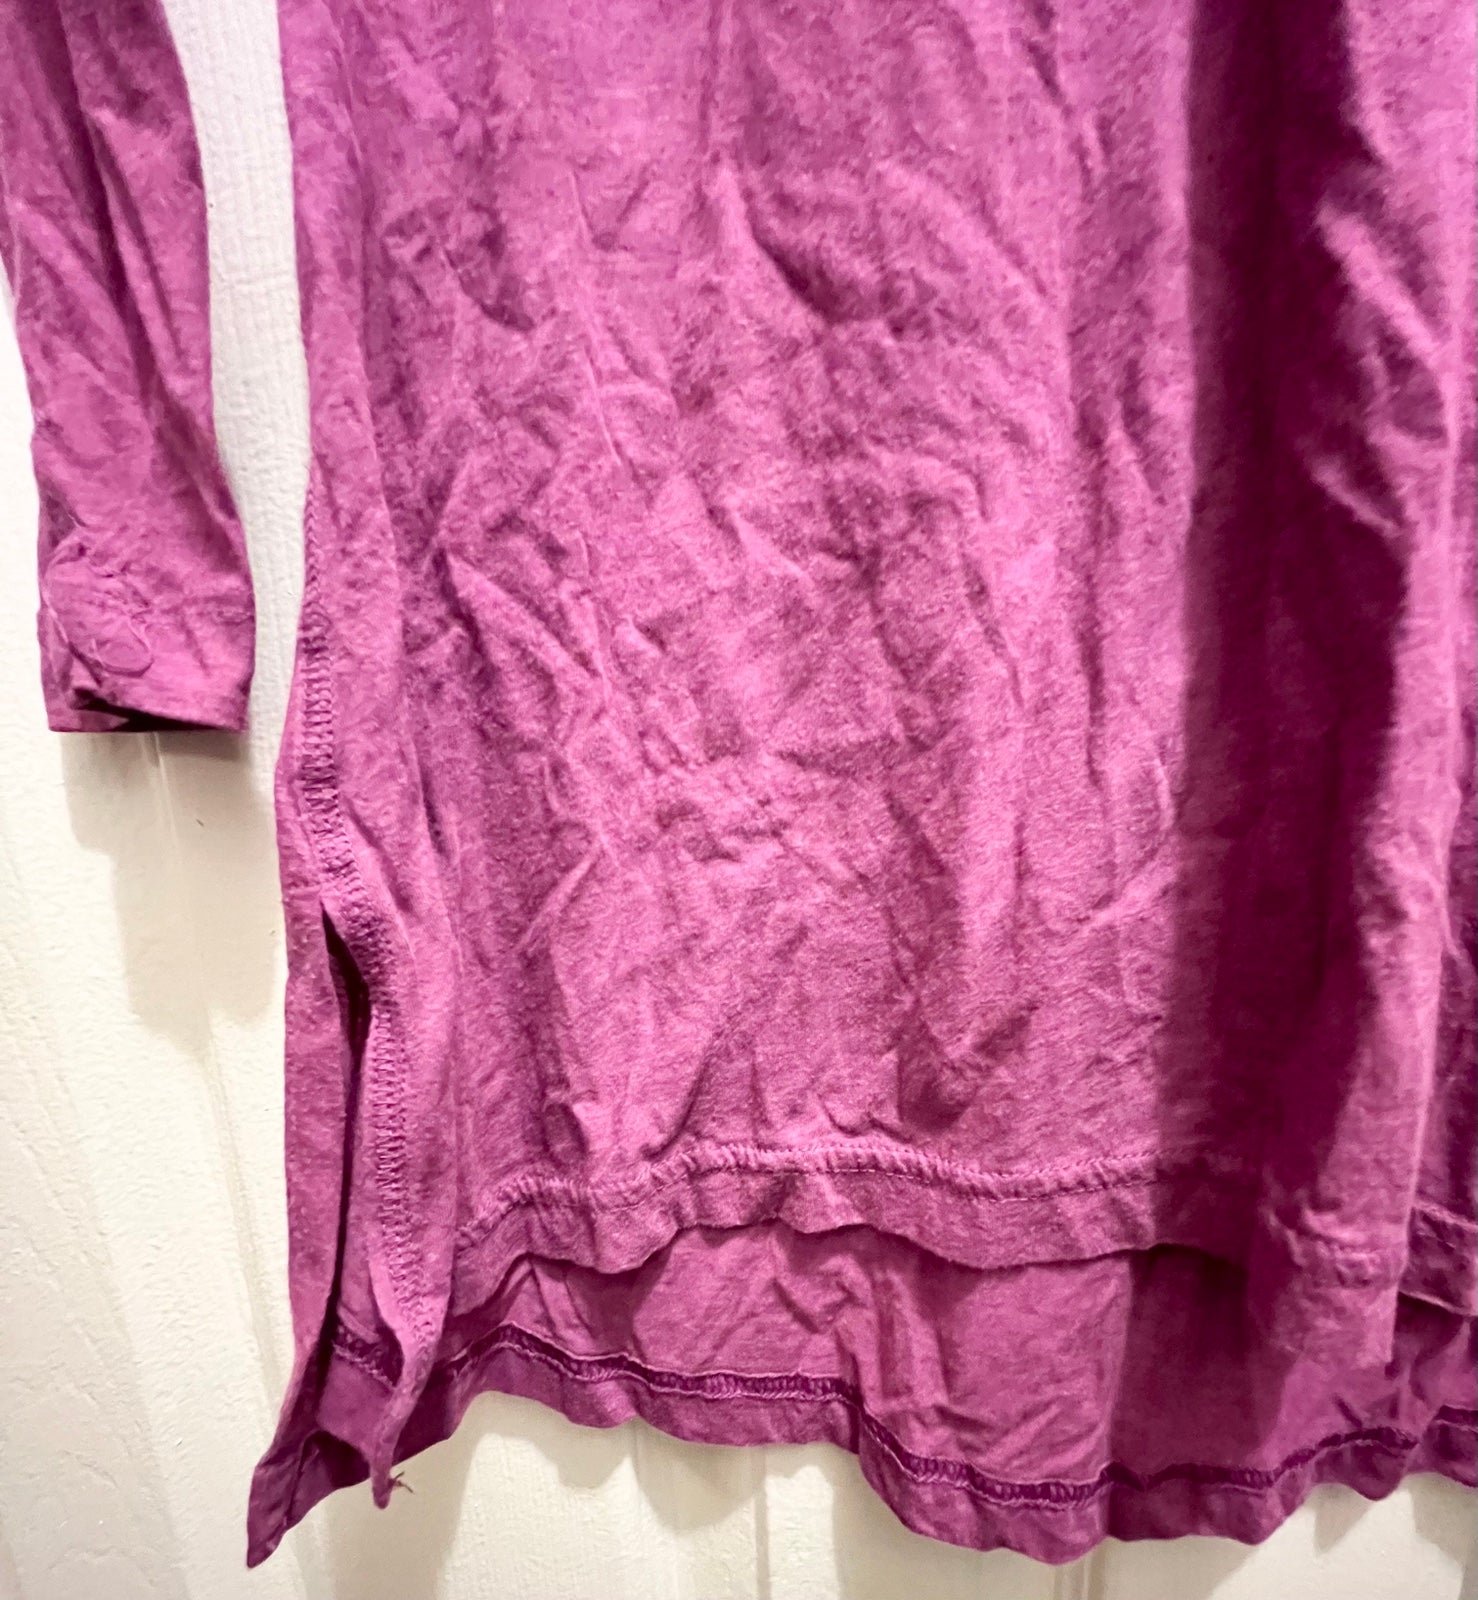 reasonable price Athleta - Hooded Shirt - Purple - Size XS Ok0fERMyo just buy it